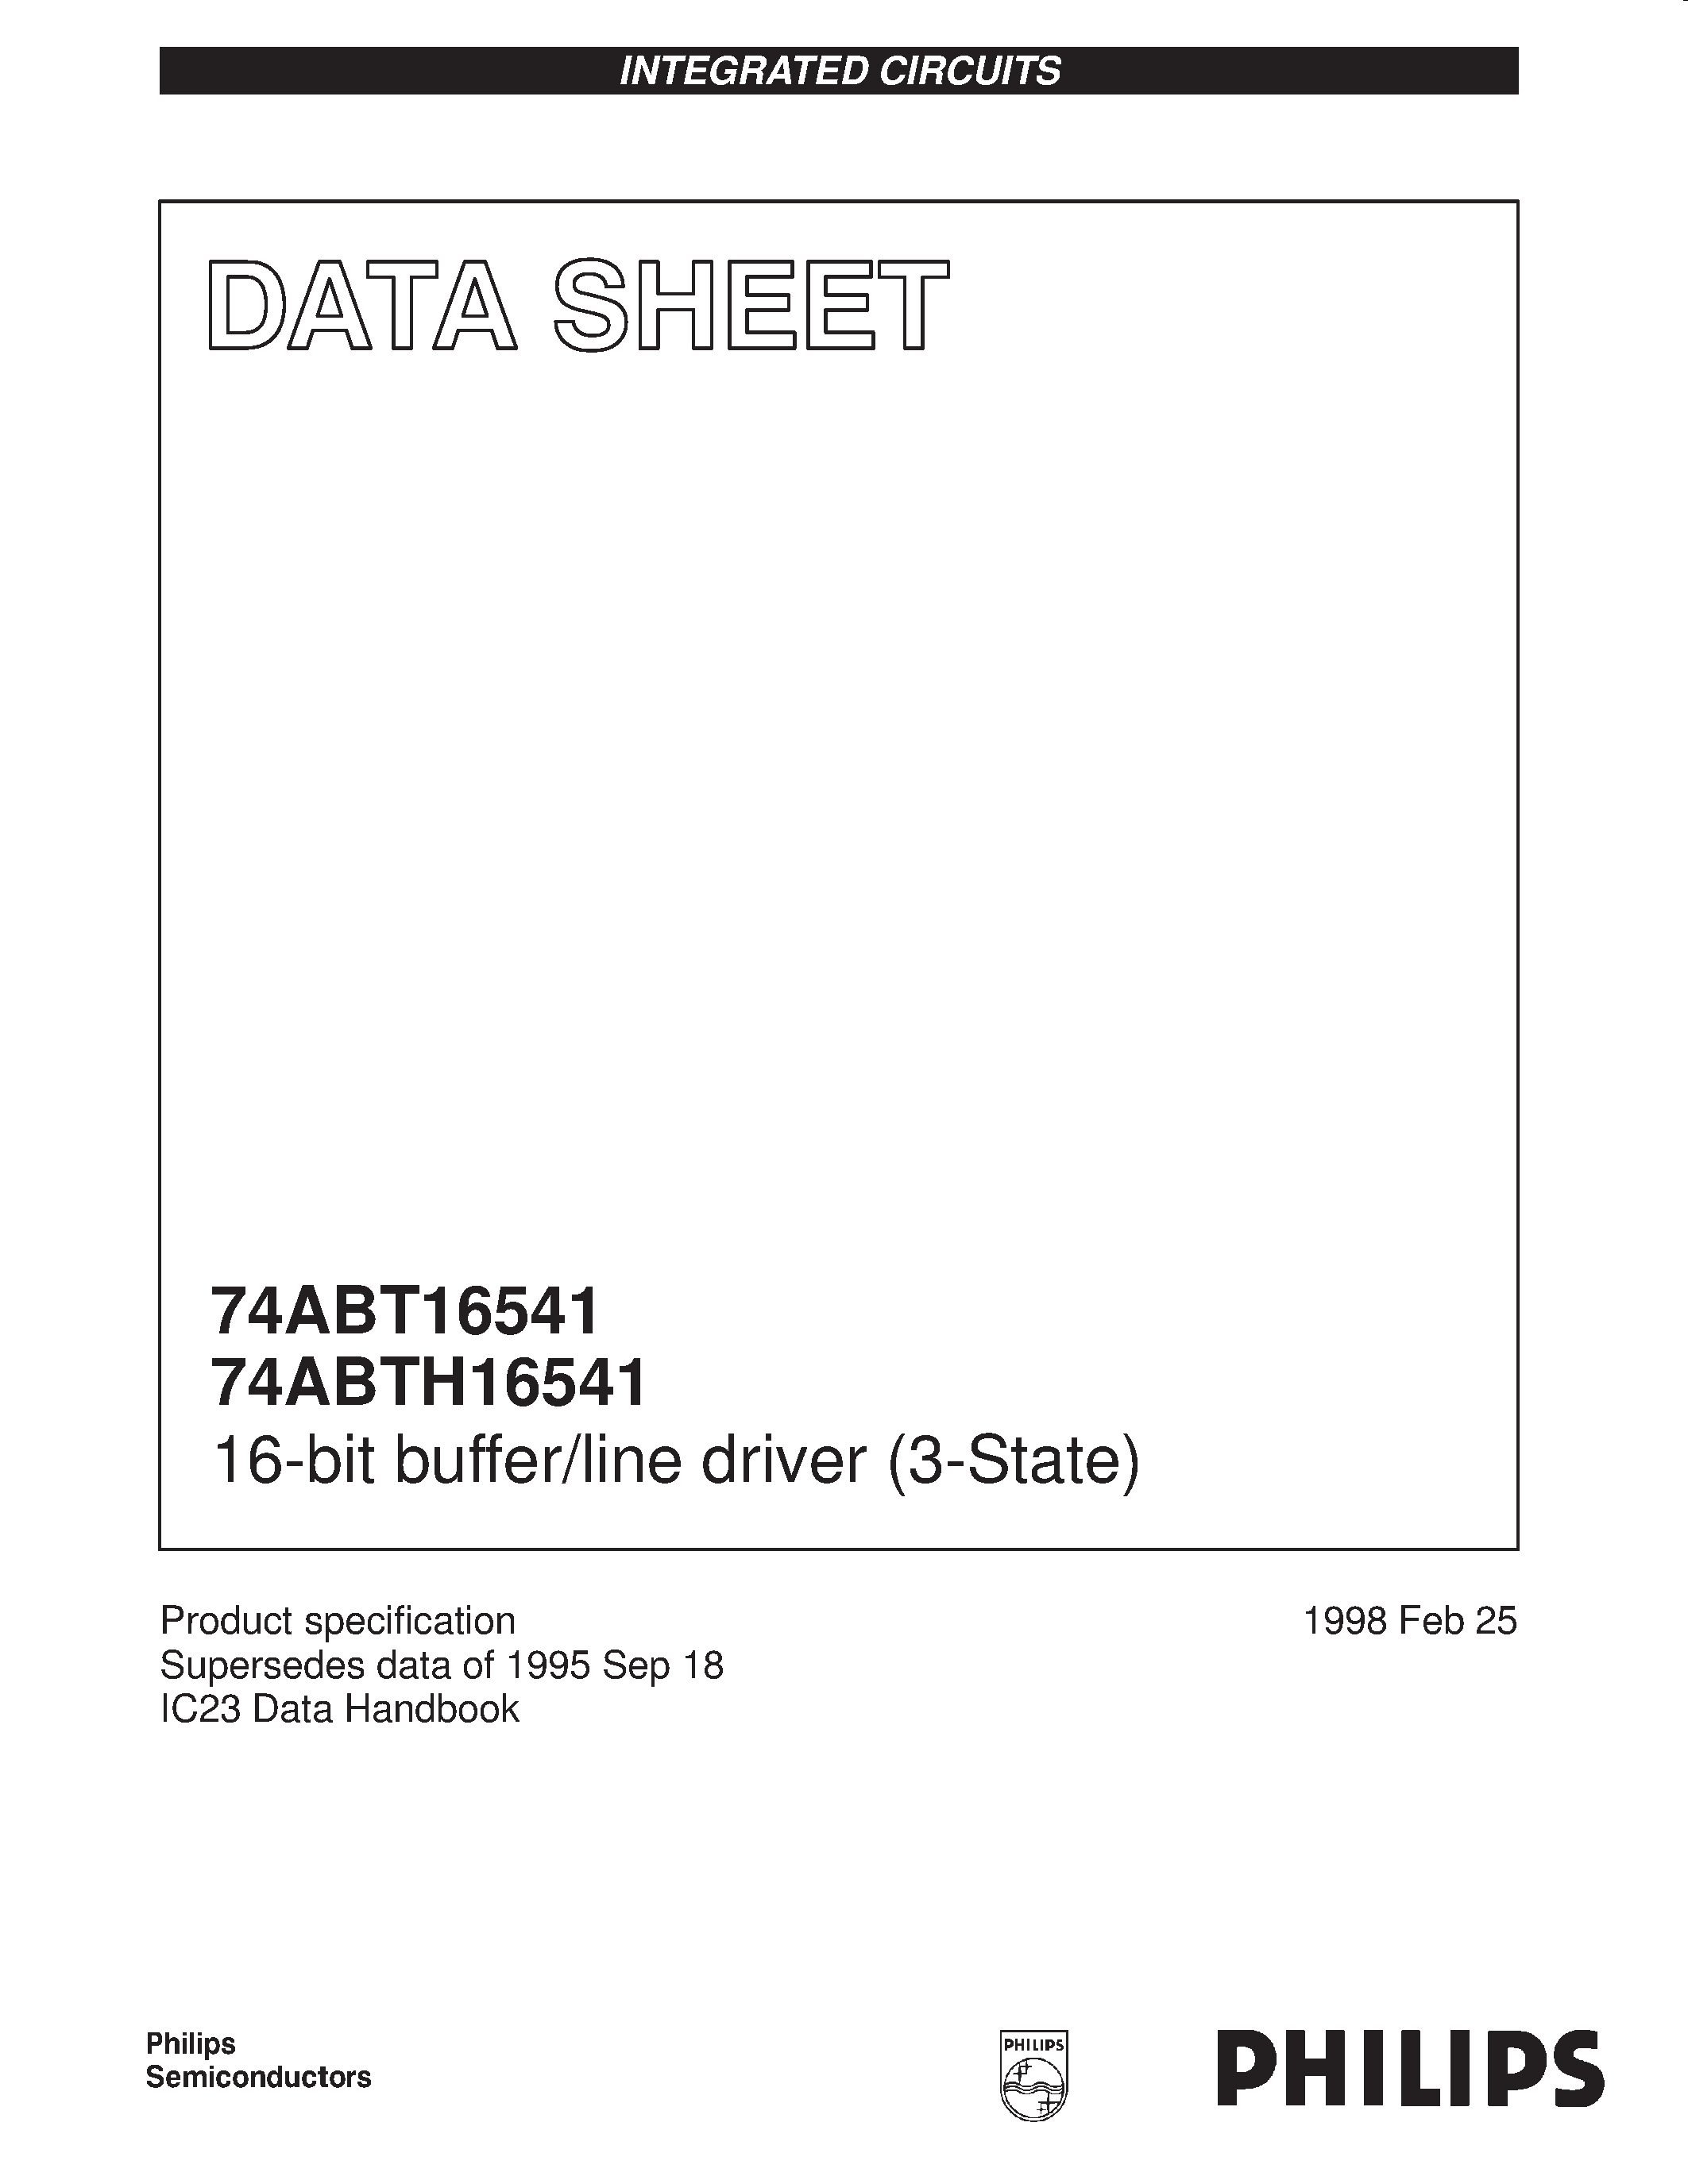 Даташит 74ABTH16541DL - 16-bit buffer/line driver 3-State страница 1